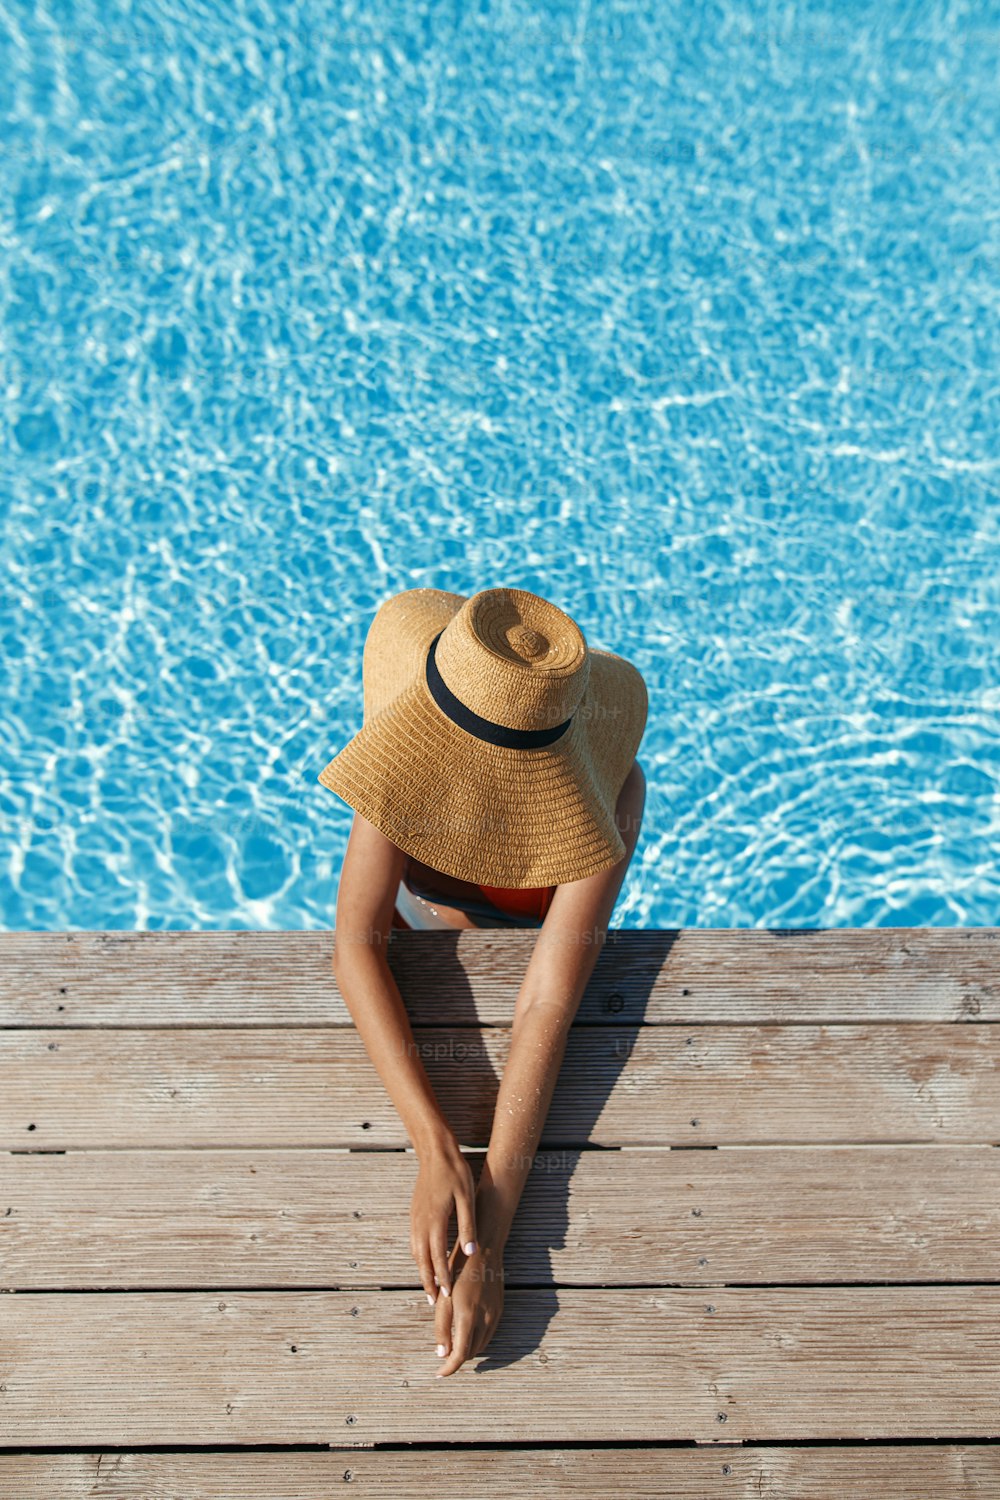 Beautiful woman in hat relaxing in pool water, enjoying summer